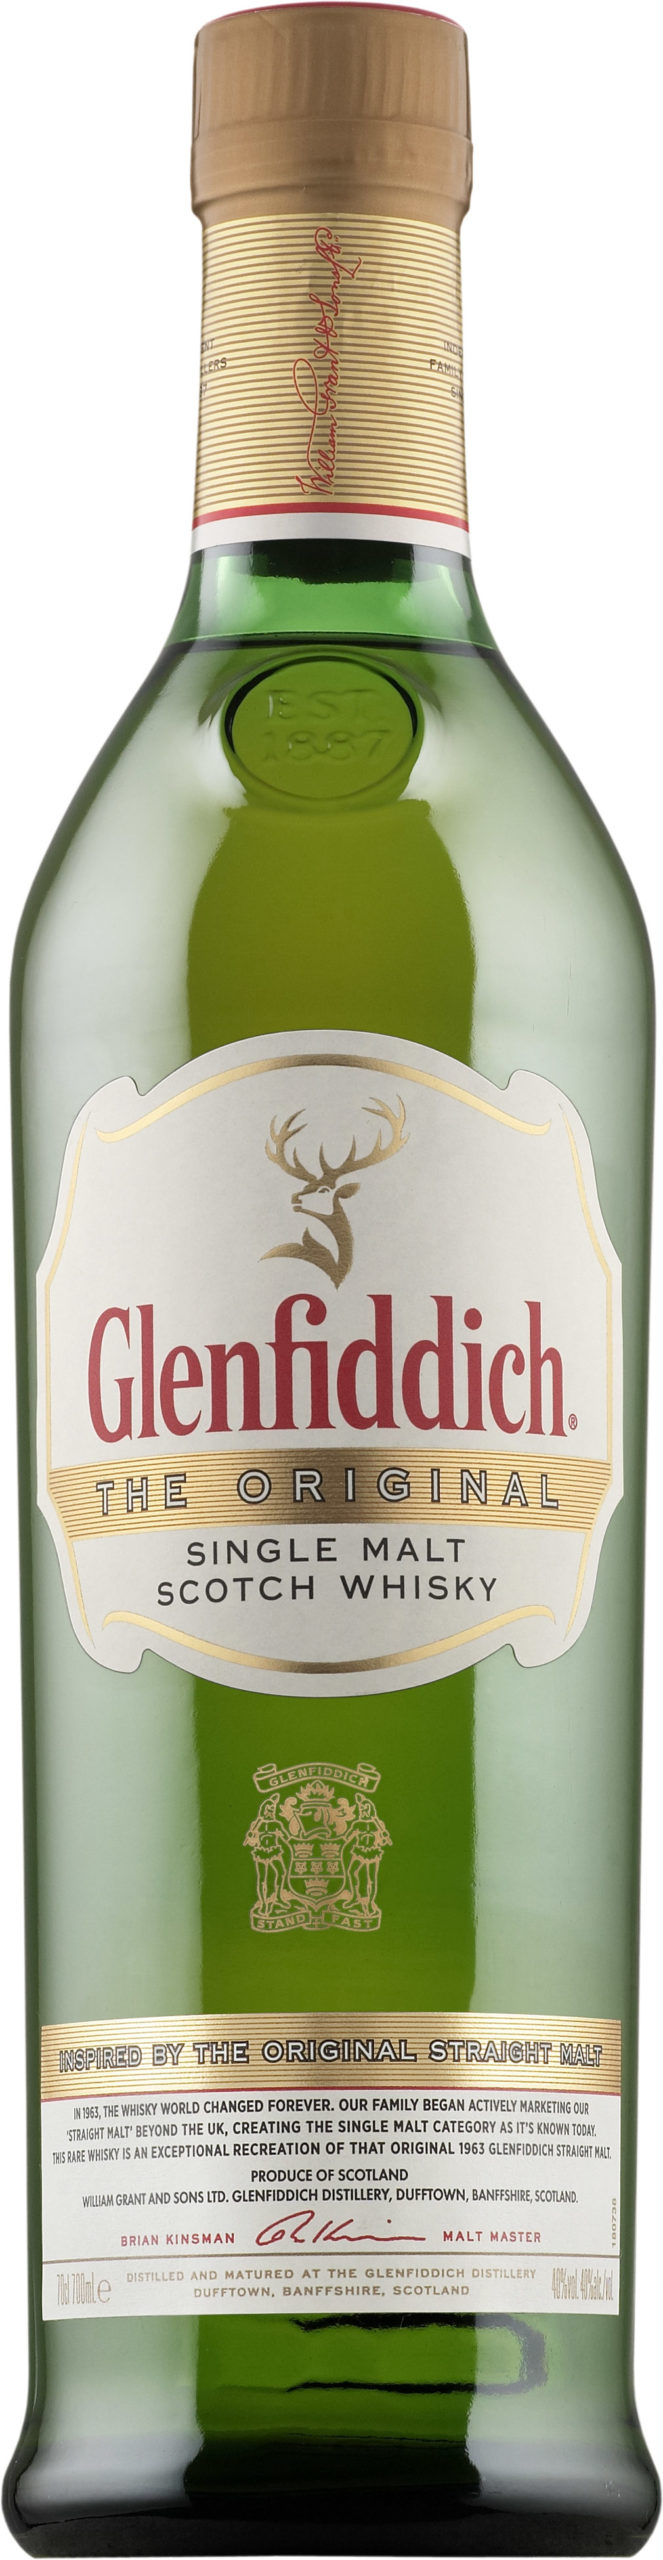 Glenfiddich The Original Single Malt